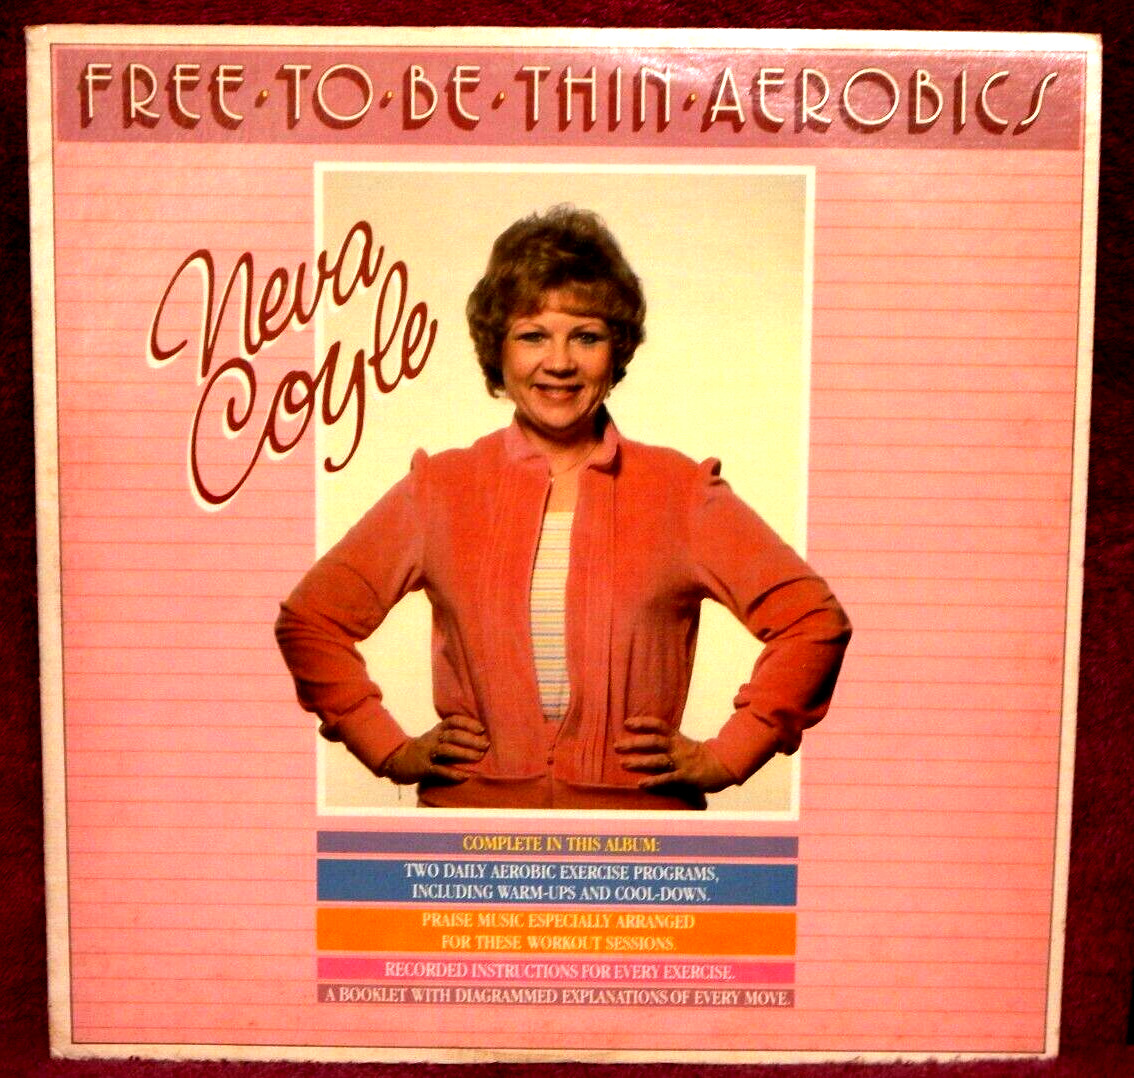 Neva Coyle Free to Be Thin Aerobics LP PLAY GRADED FULLY TESTED